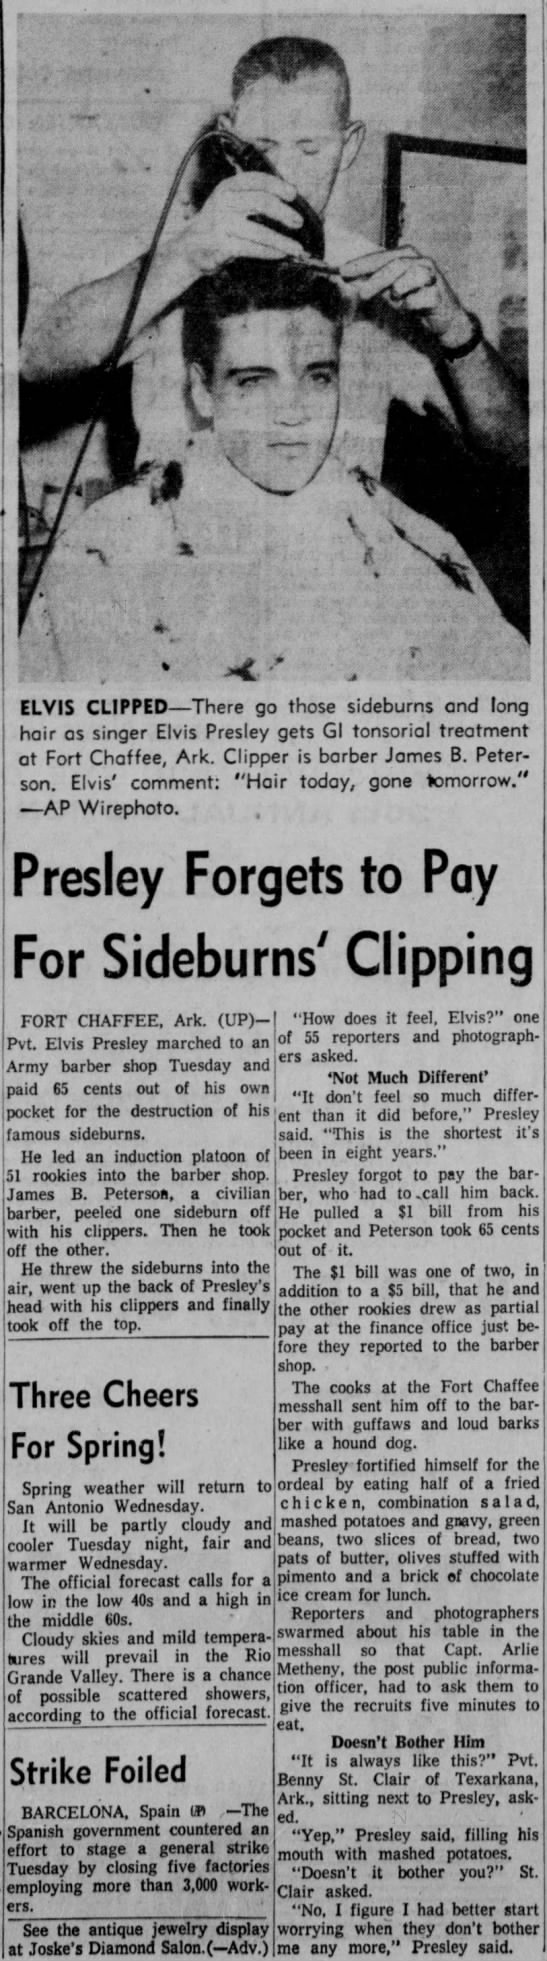 Elvis Presley gets hair cut for army - 